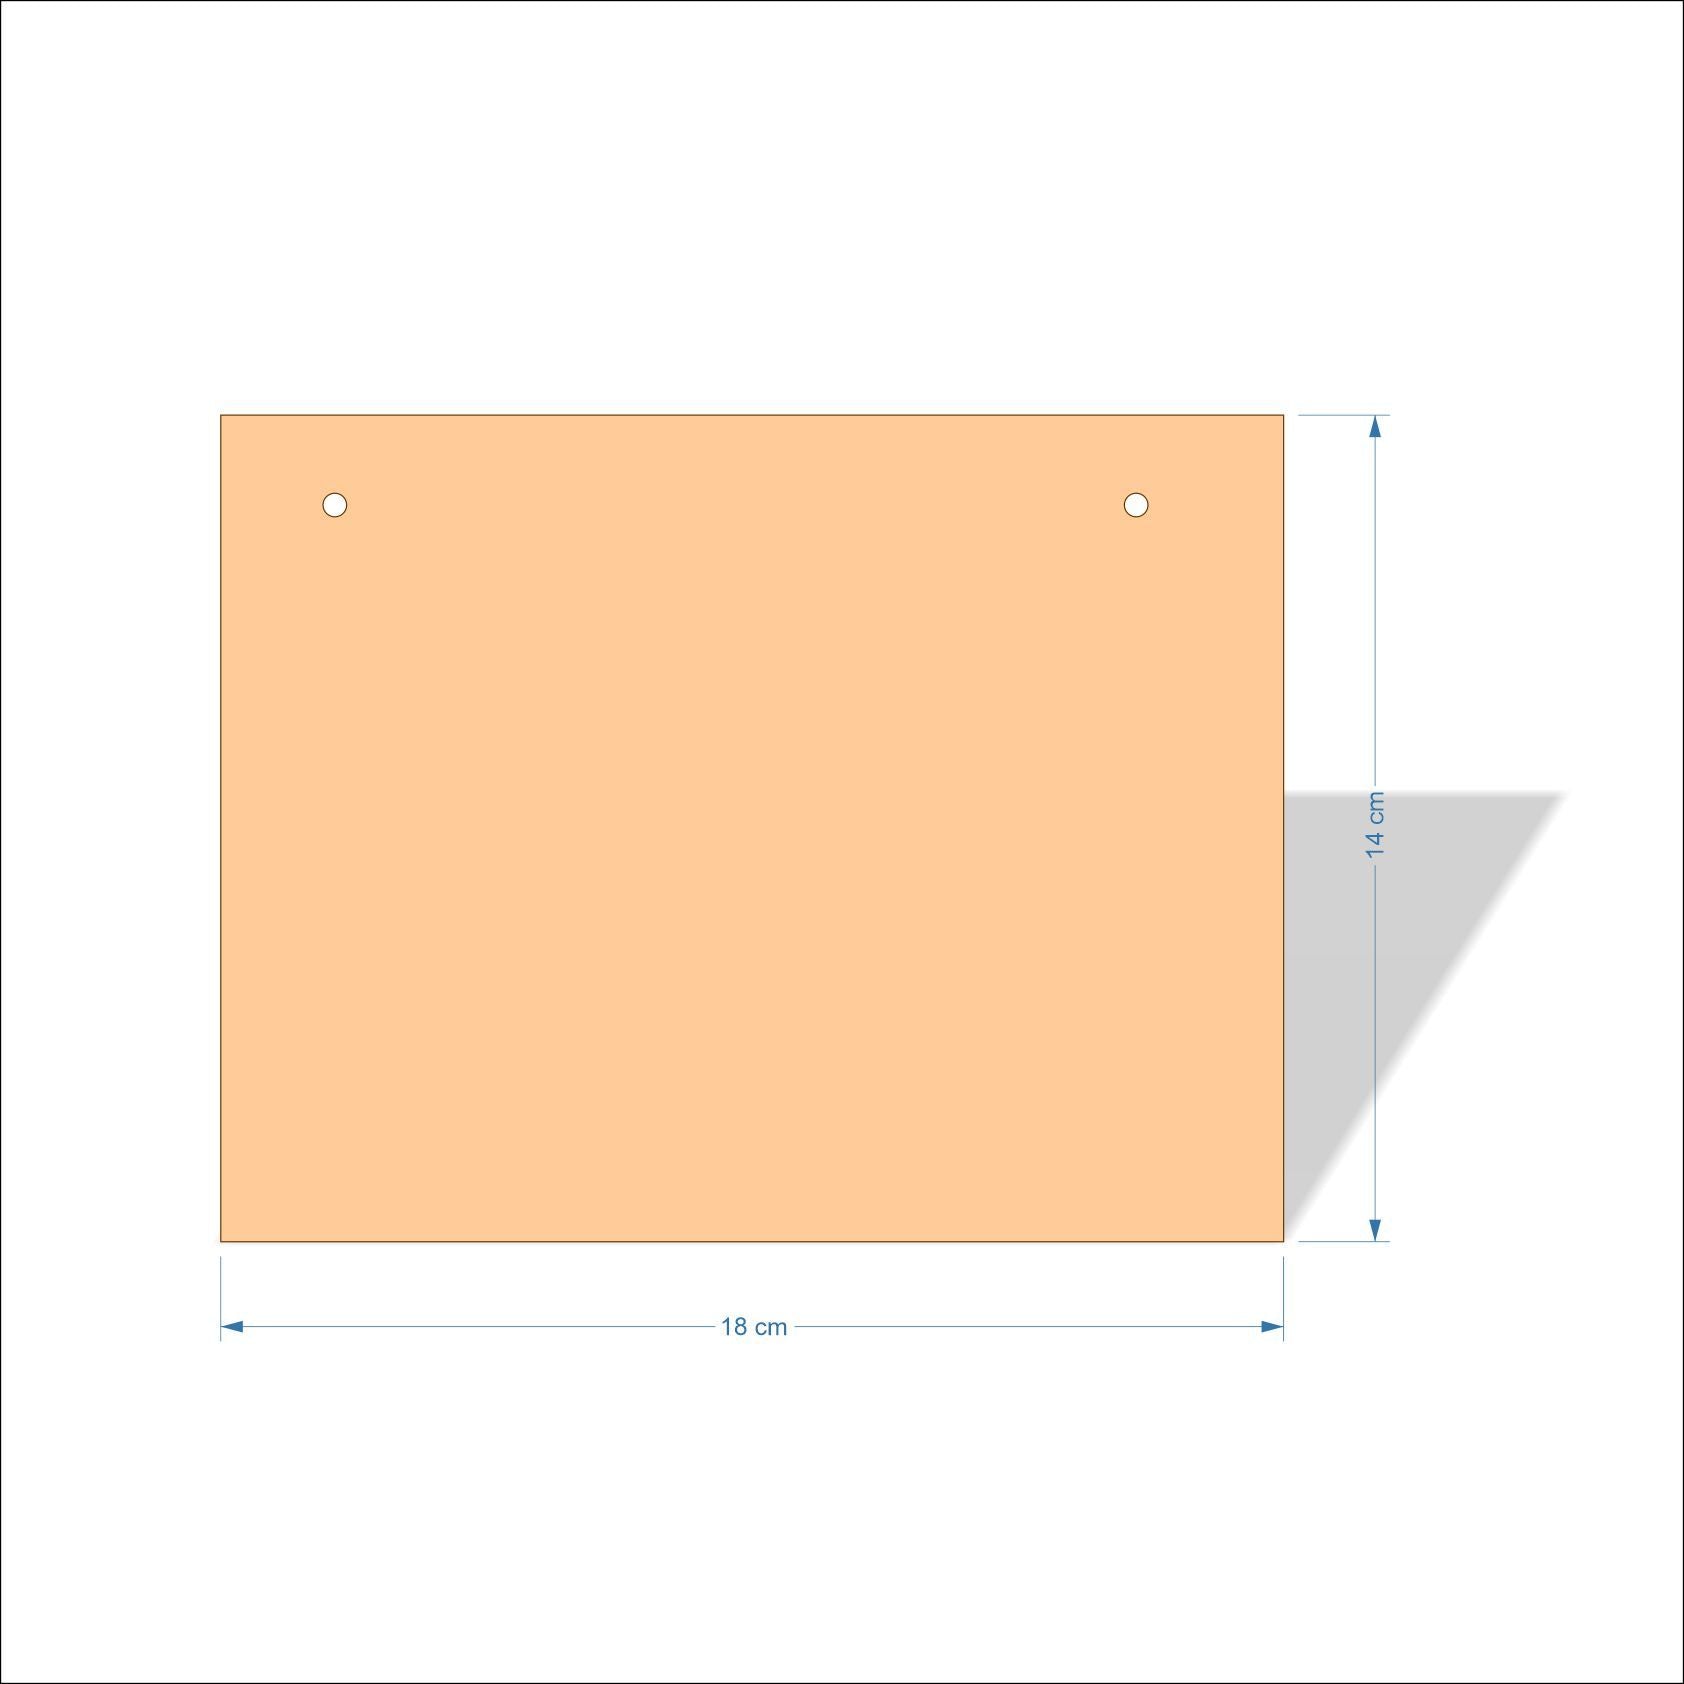 18 cm X 14 cm 3mm MDF Plaques with square corners